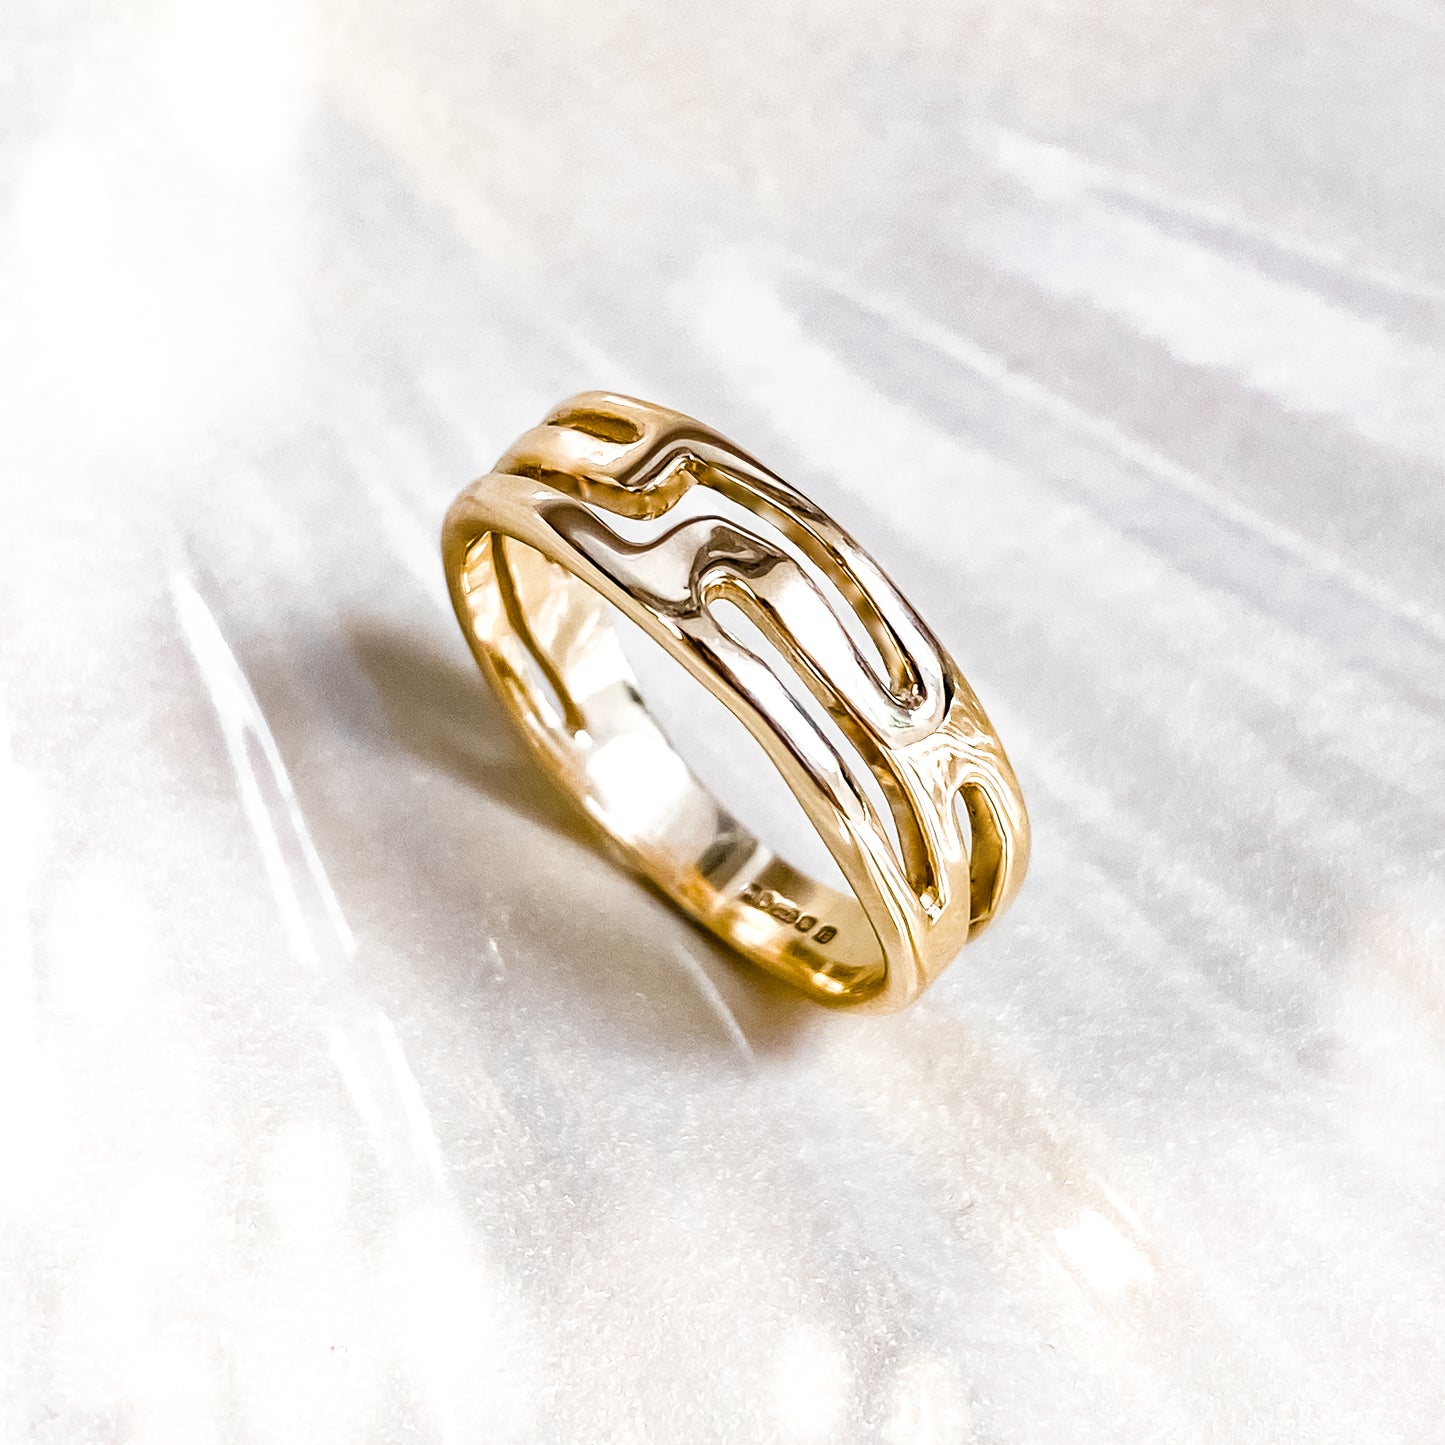 Gold Narrow Strata Ring - Yellow, Rose or White Gold